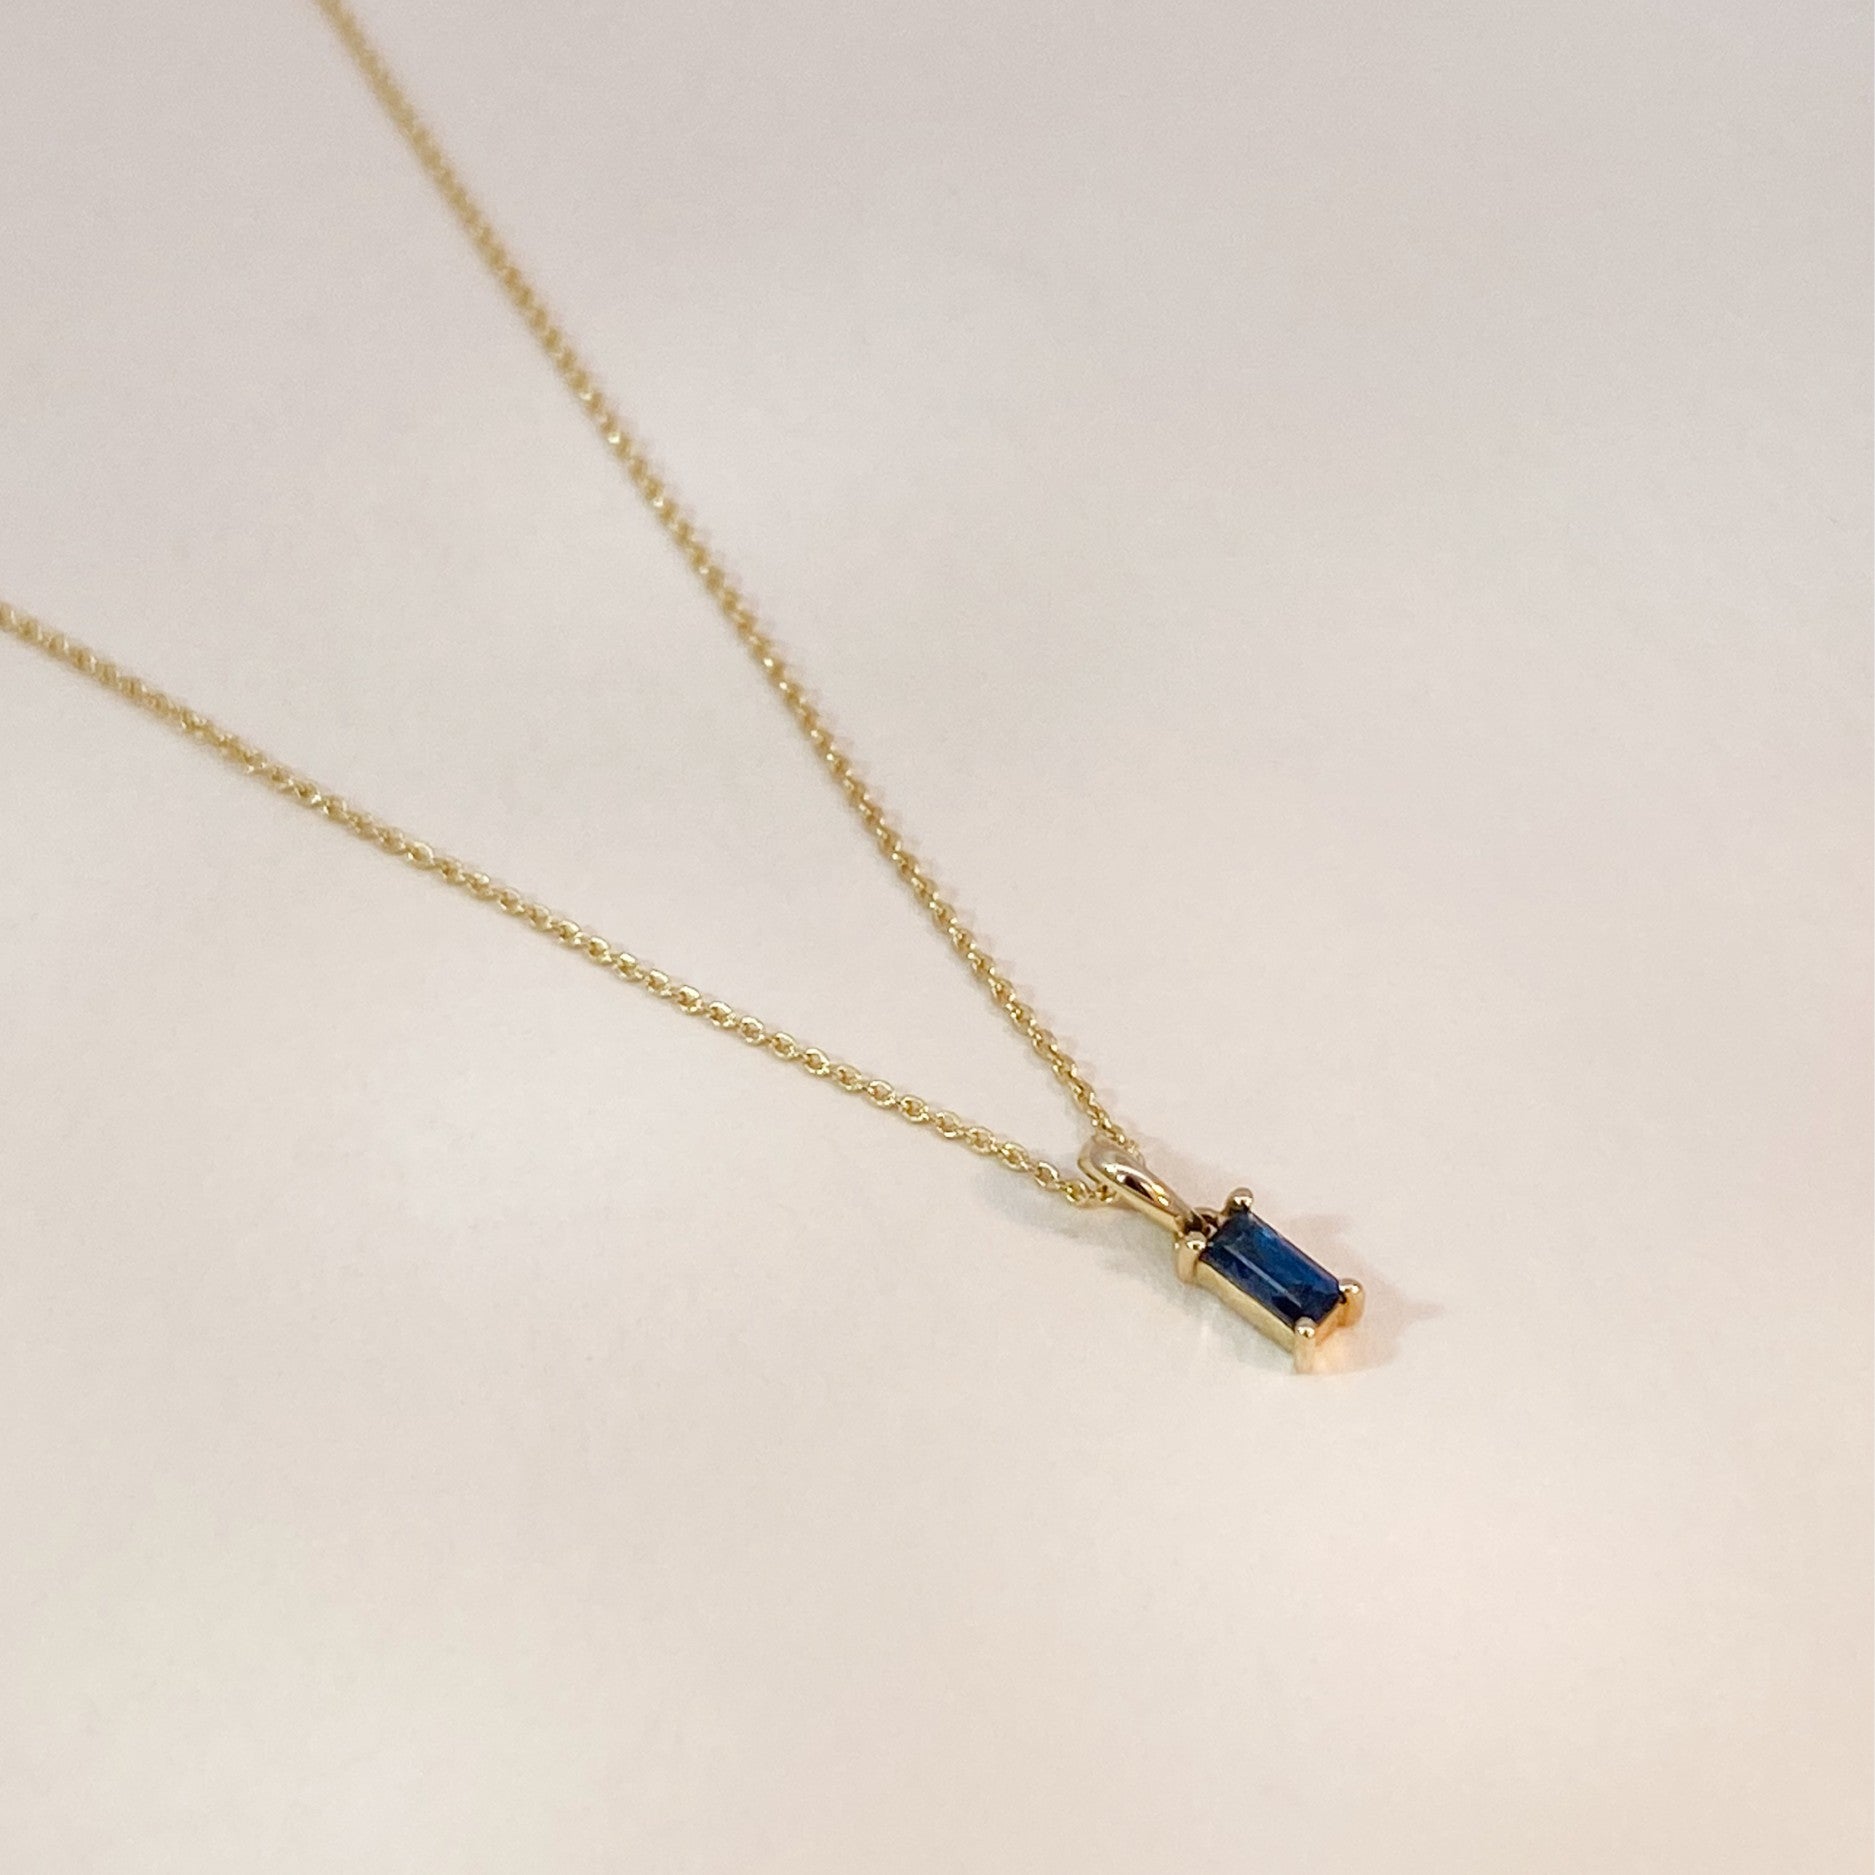 Birthstone necklace september sapphire